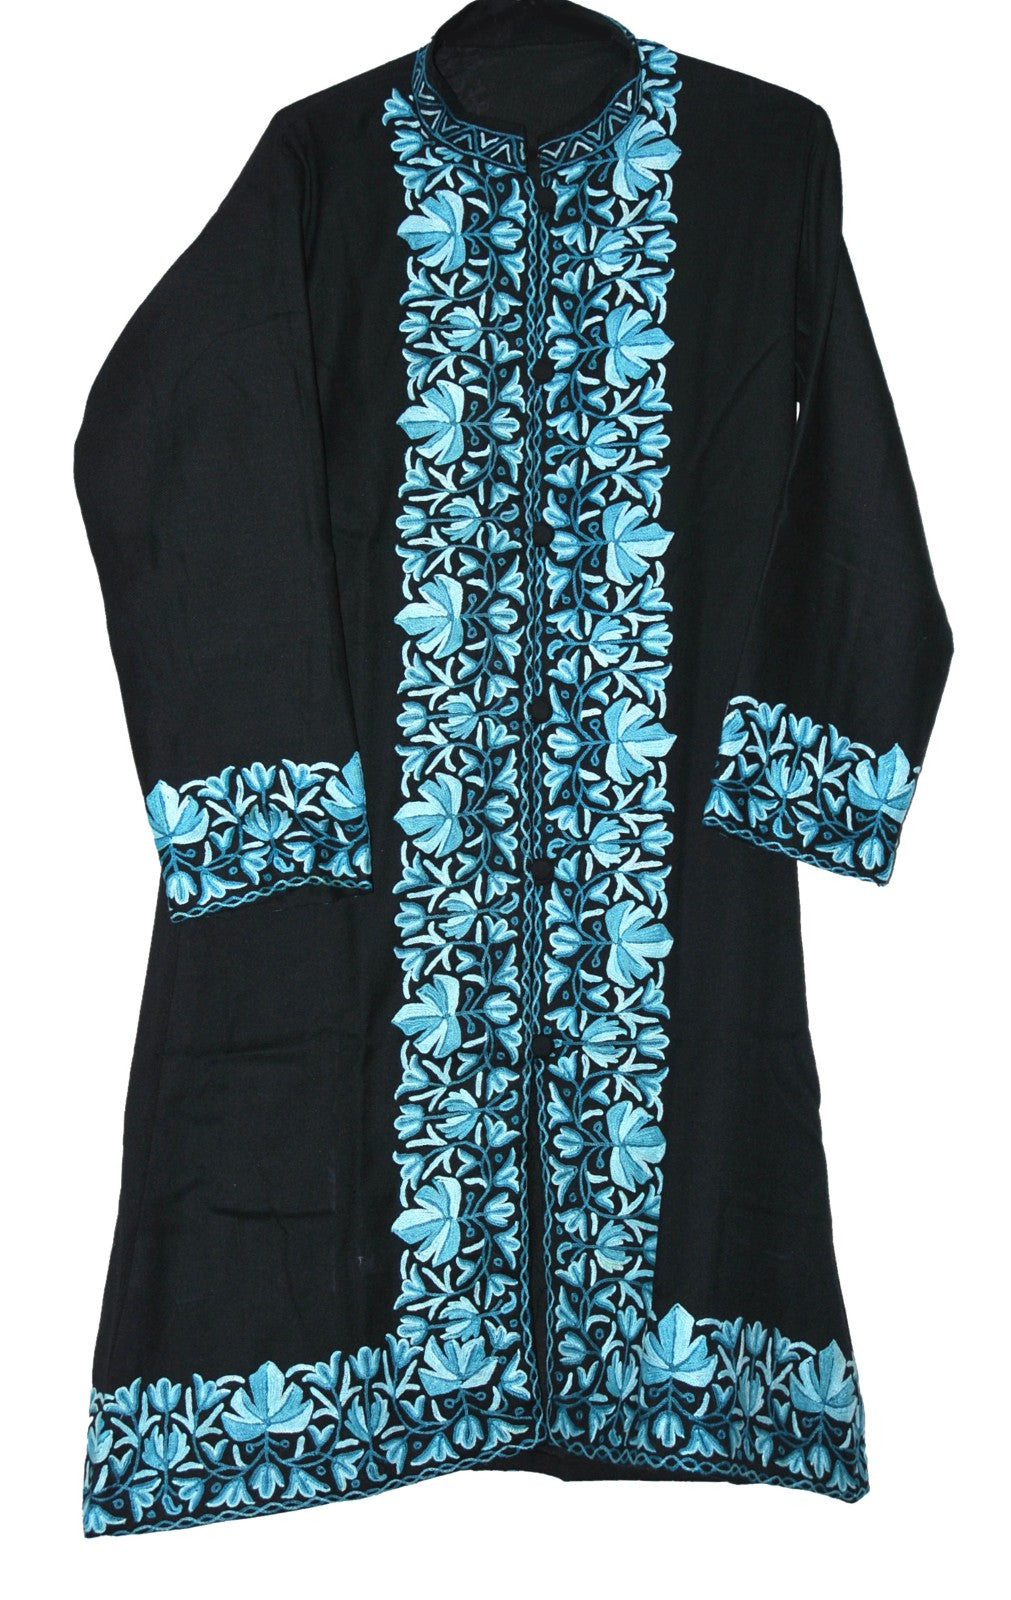 Woolen Coat Long Jacket Black, Blue Embroidery #BD-118